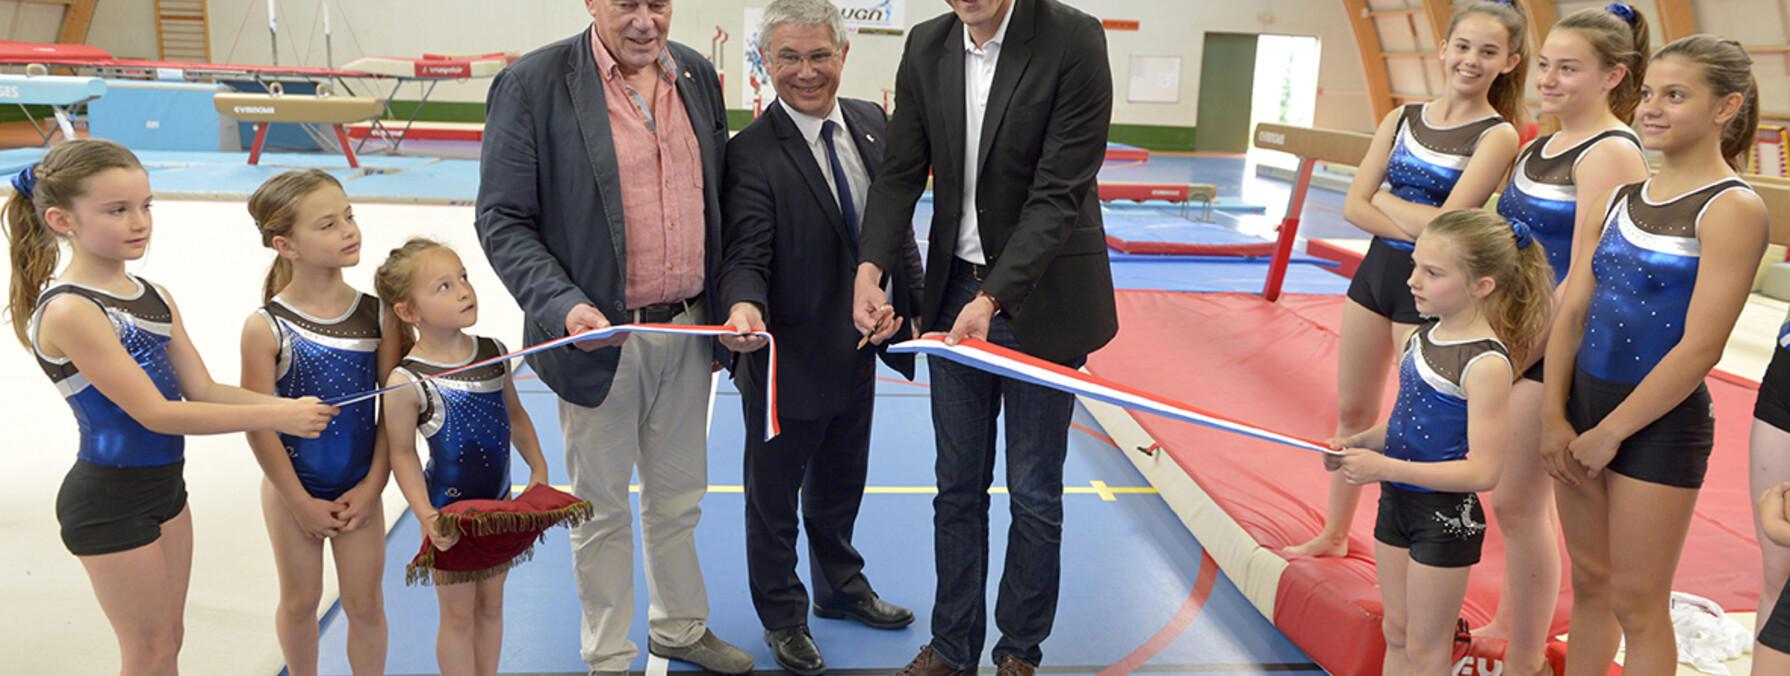 Inauguration de la Salle de gymnastique du Pontreau